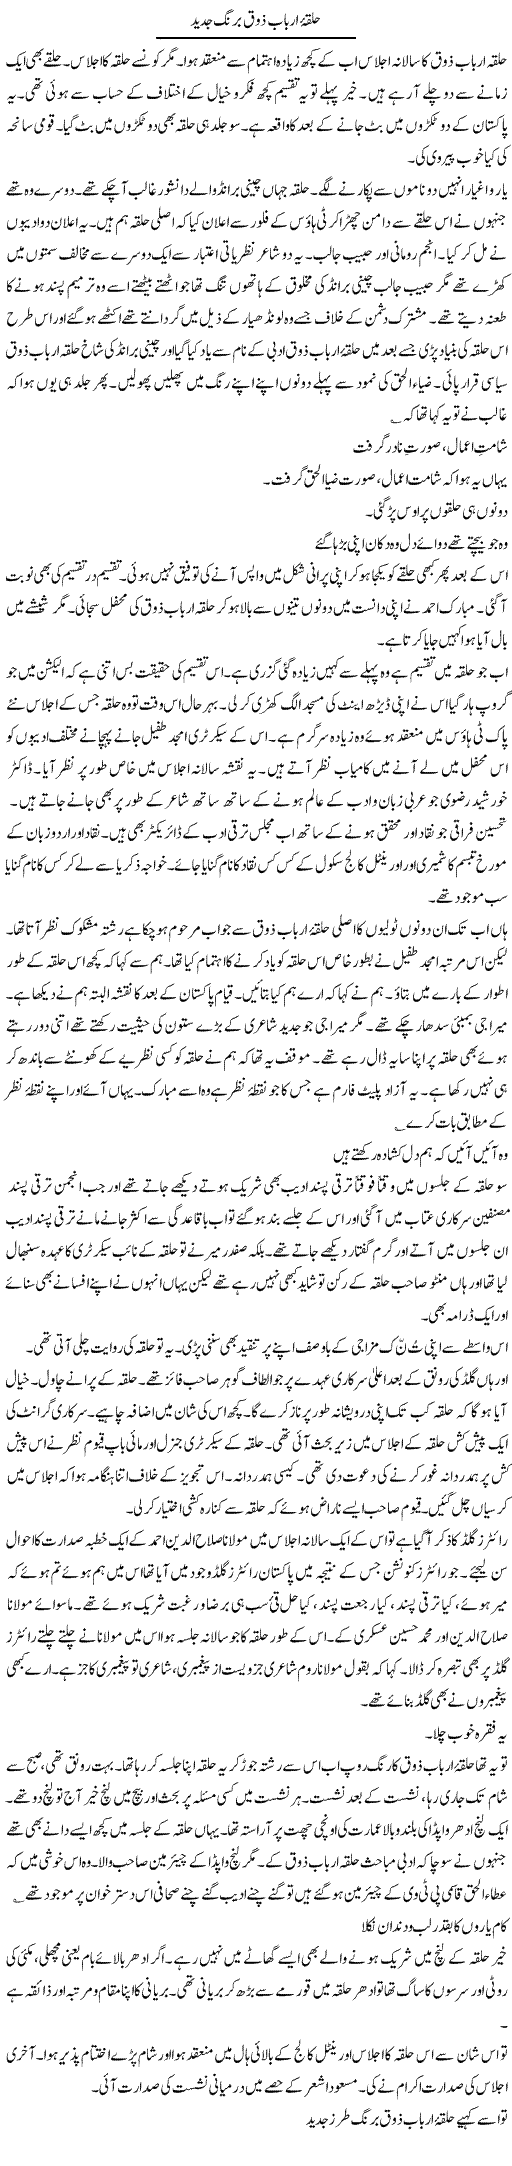 Halqa Arbab Zouq Barang Jadeed | Intizar Hussain | Daily Urdu Columns